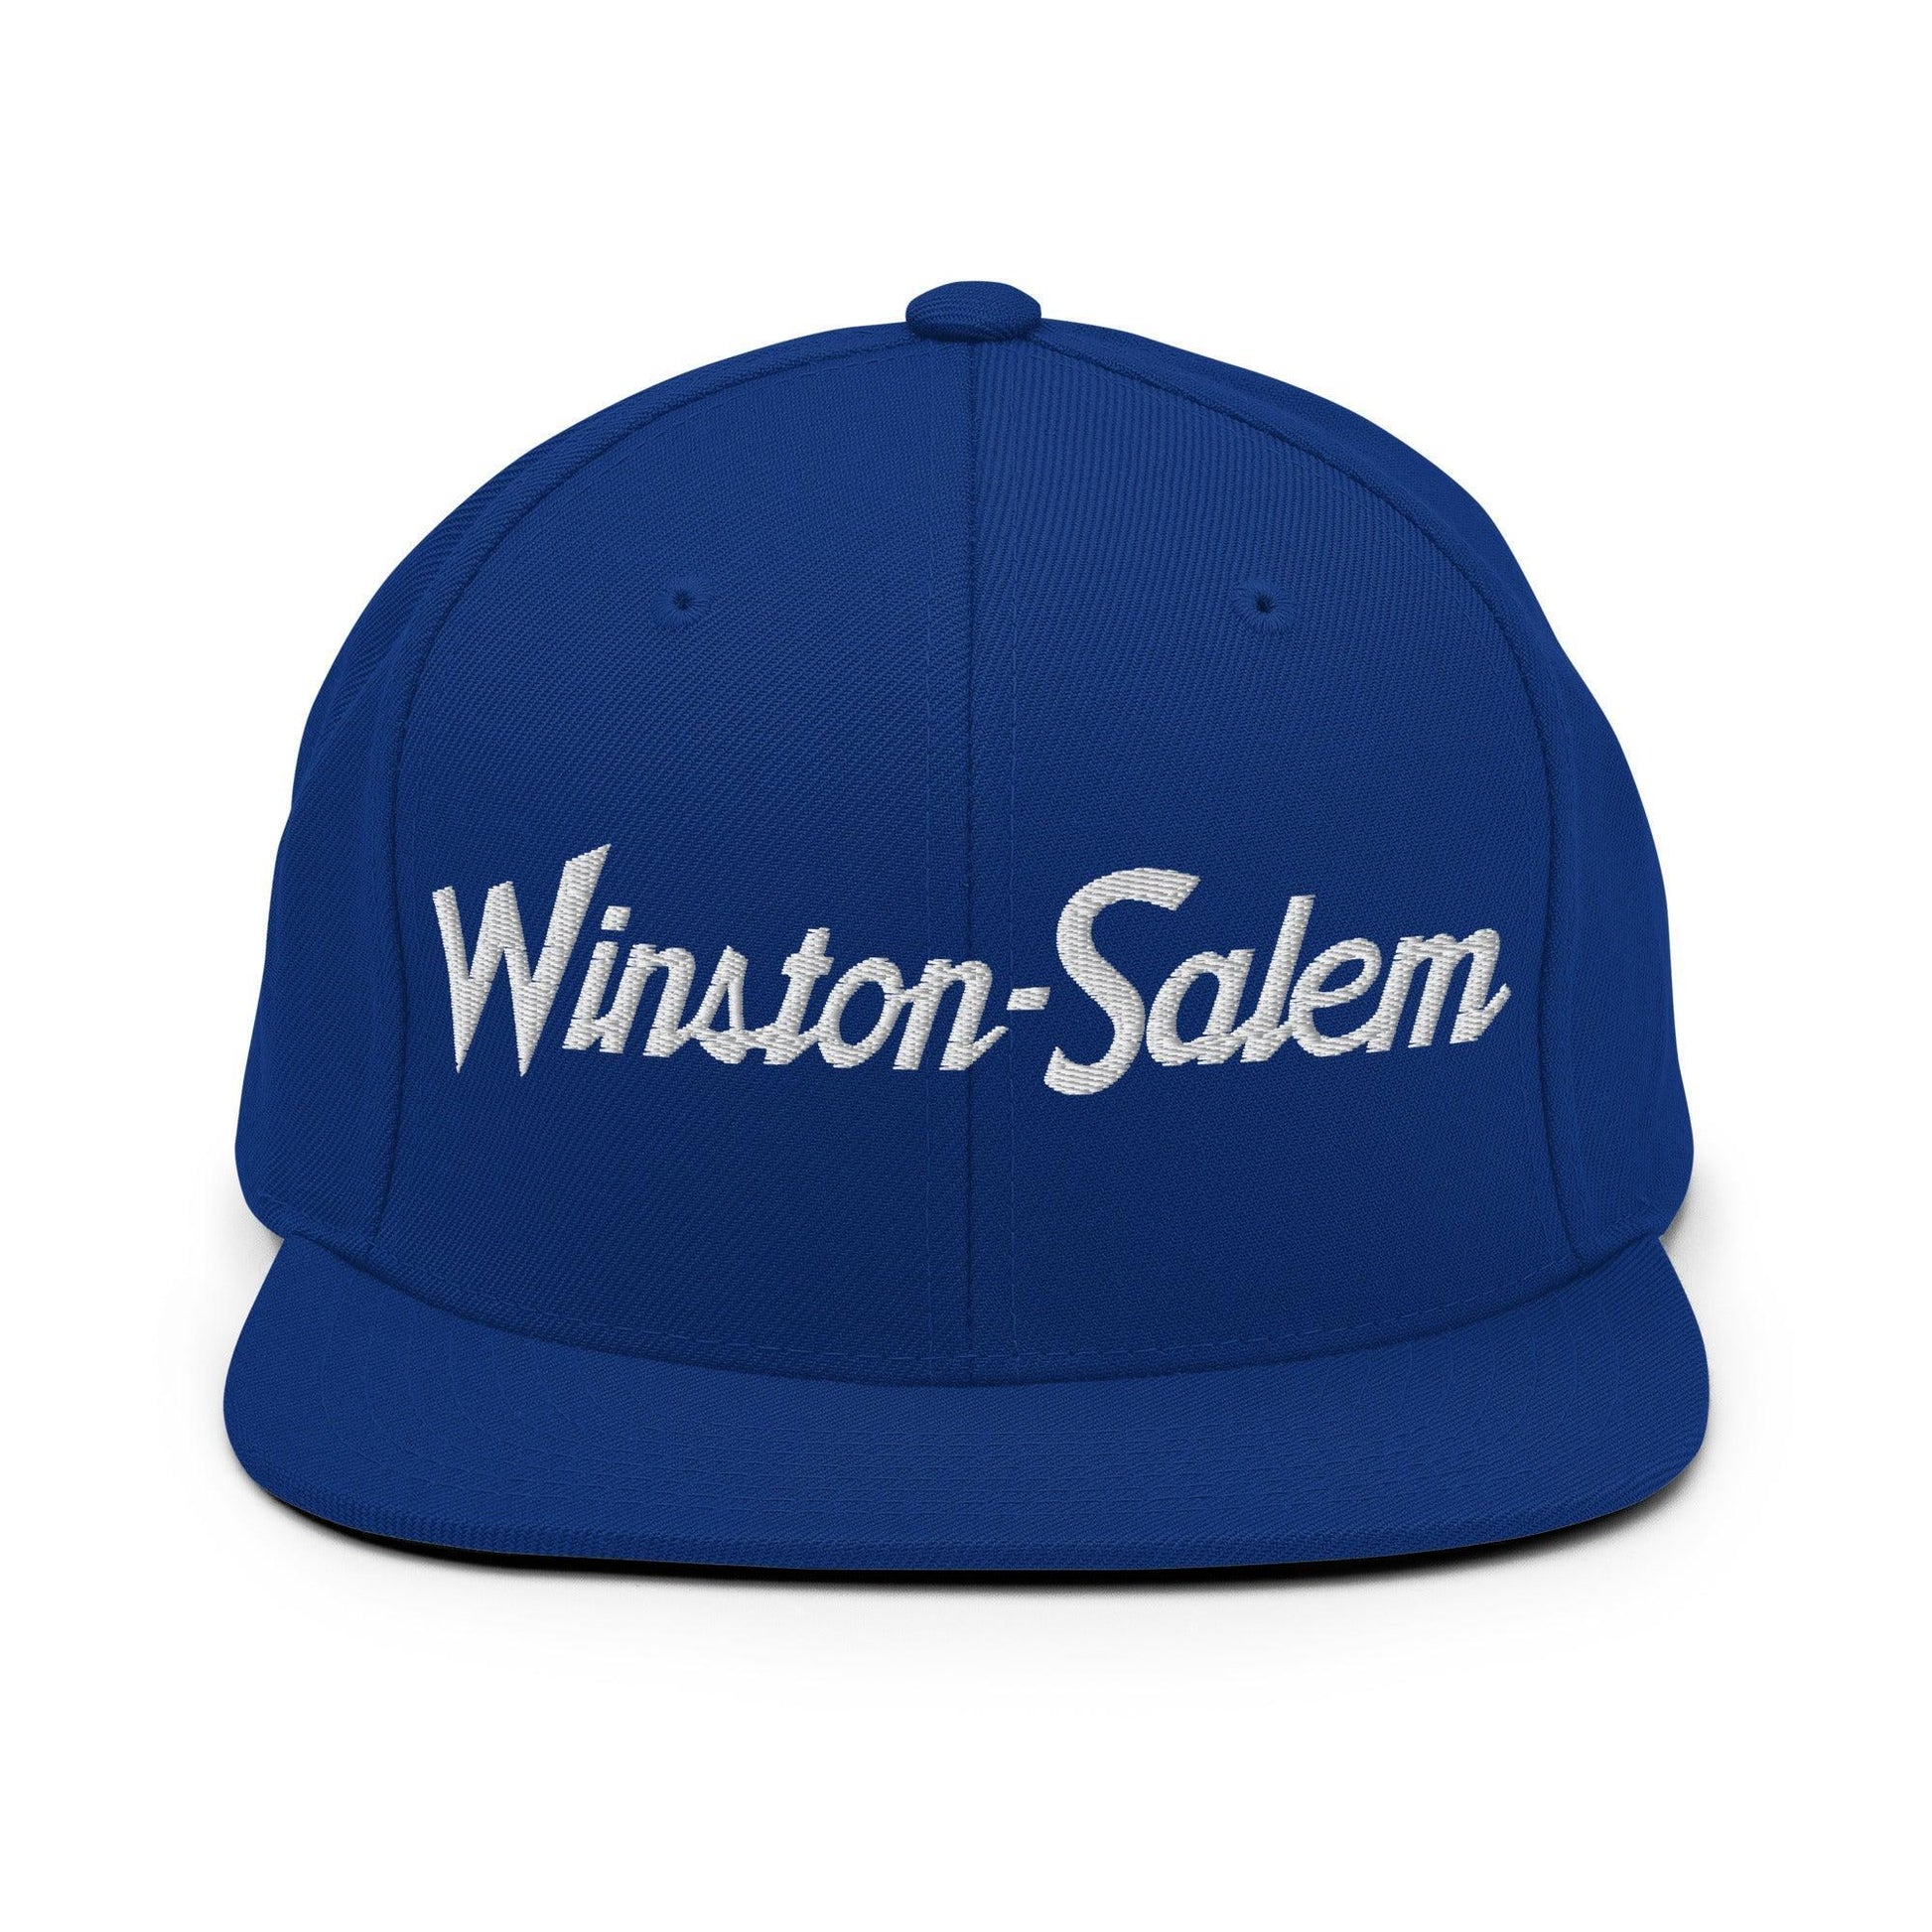 Winston-Salem Script Snapback Hat Royal Blue